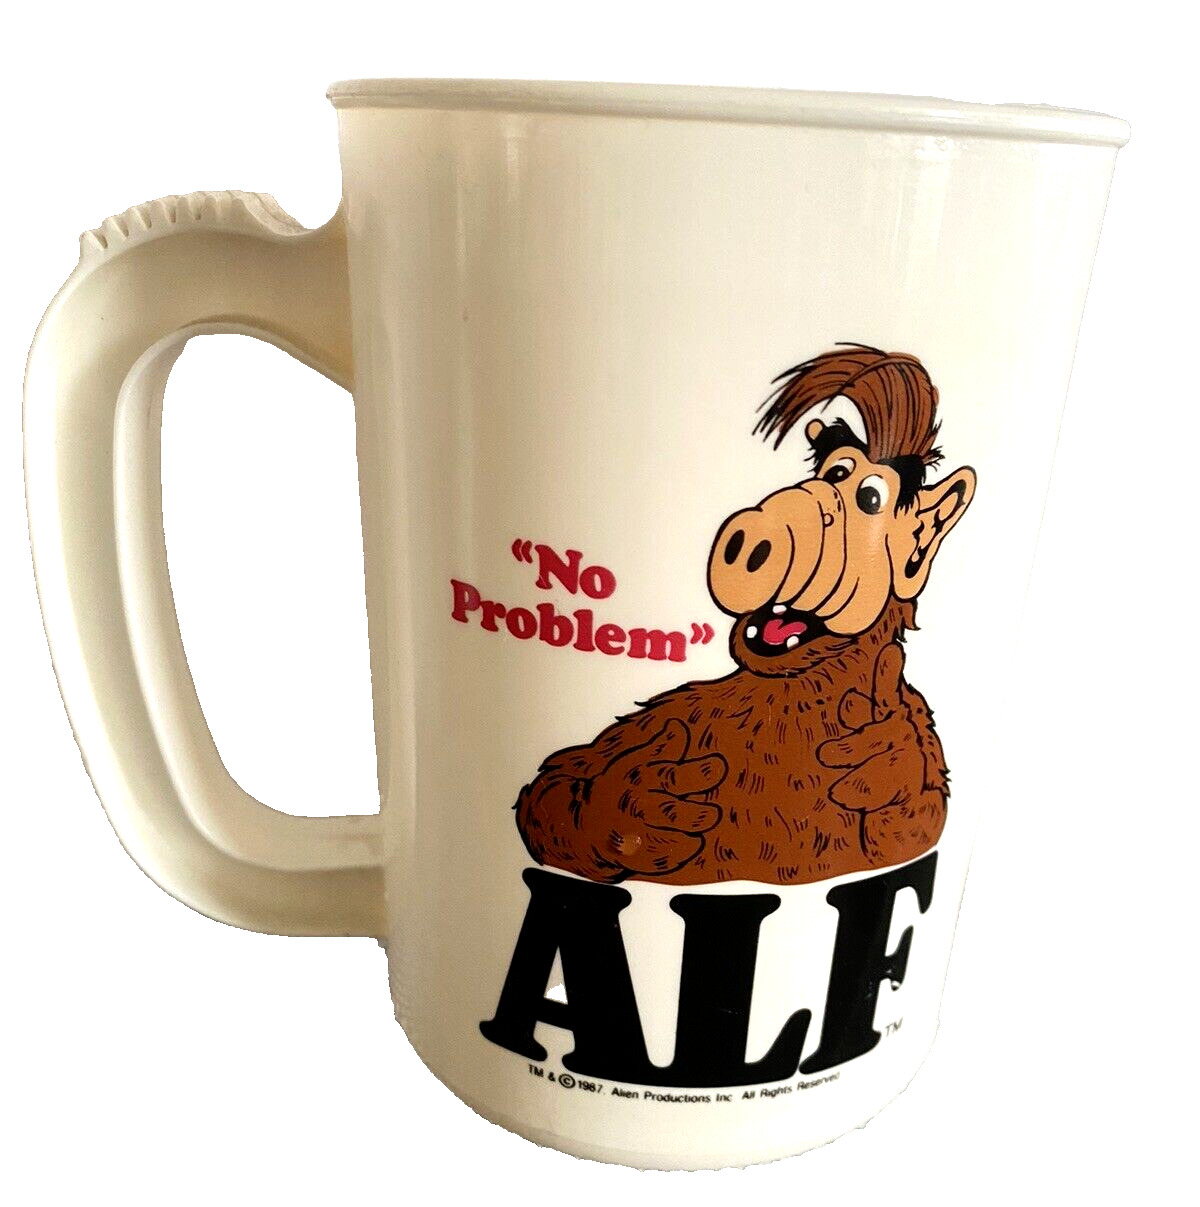 Alf Plastic Mug Coffee Cup Alien Productions Inc No Problem Vintage 1987